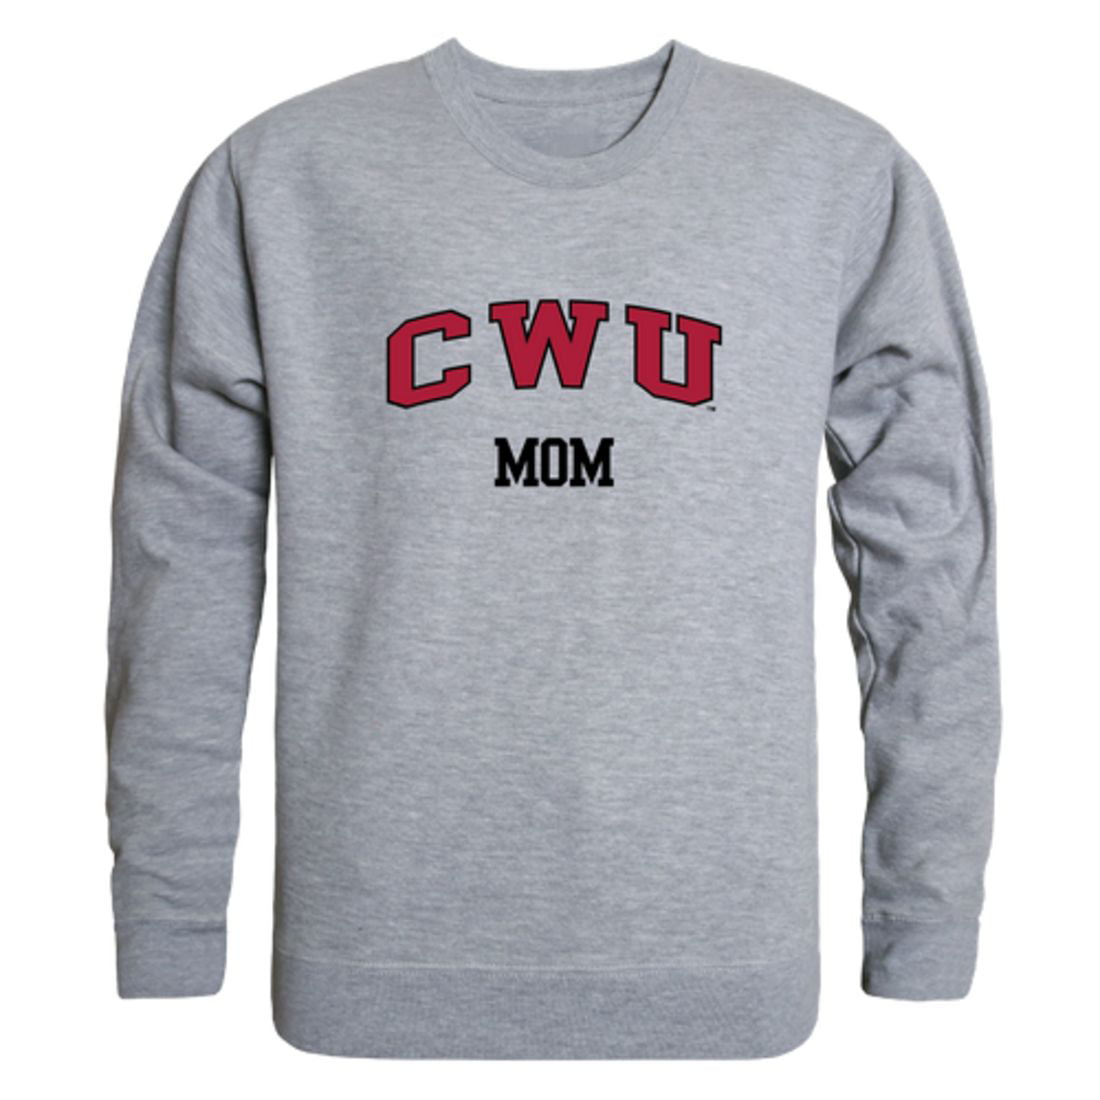 W Republic CWU Central Washington University Campus Crewneck Pullover Sweatshirt Sweater Black